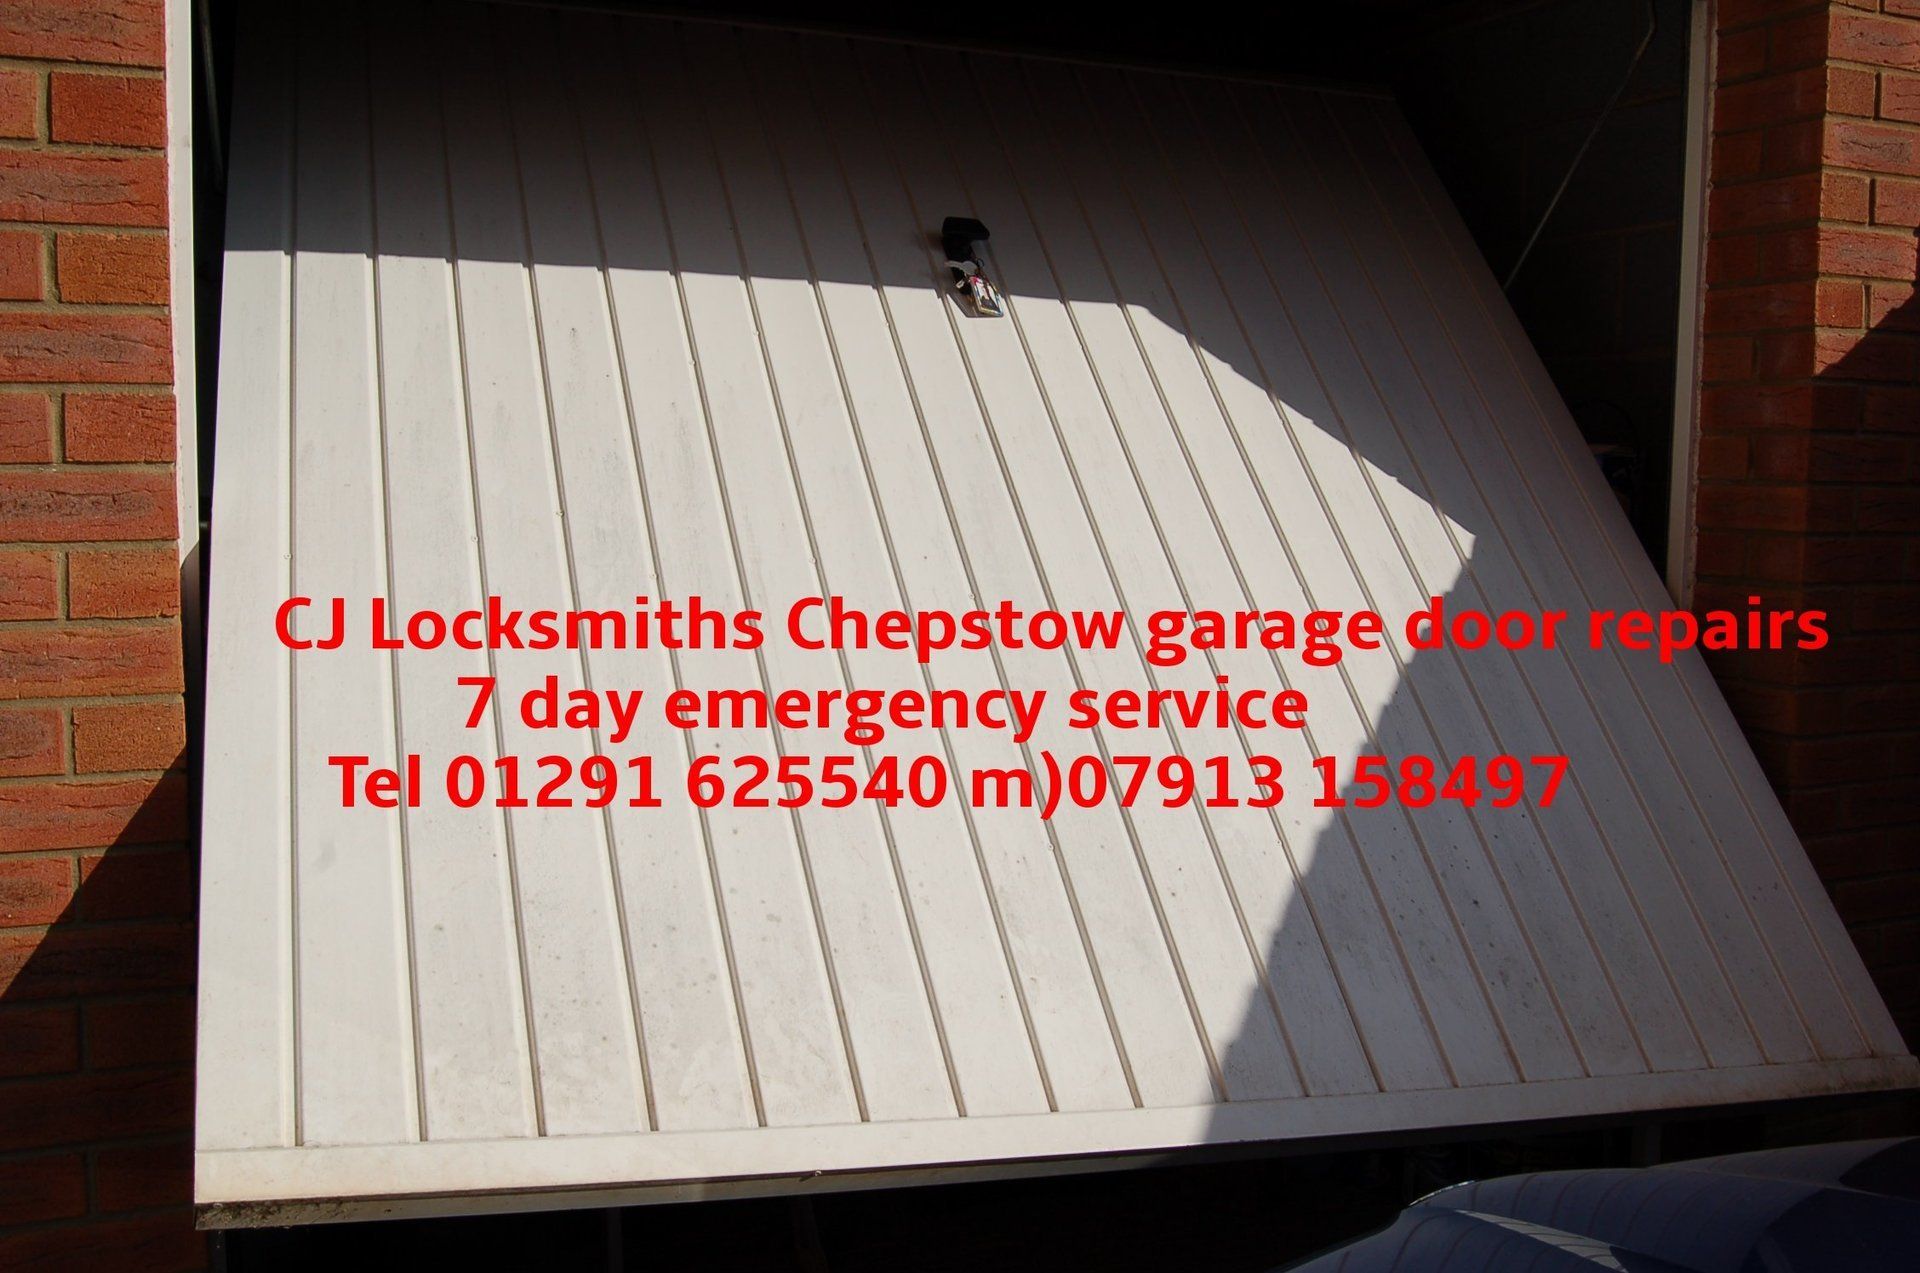 CJ Locksmiths emergency repairs for garage doors and locks